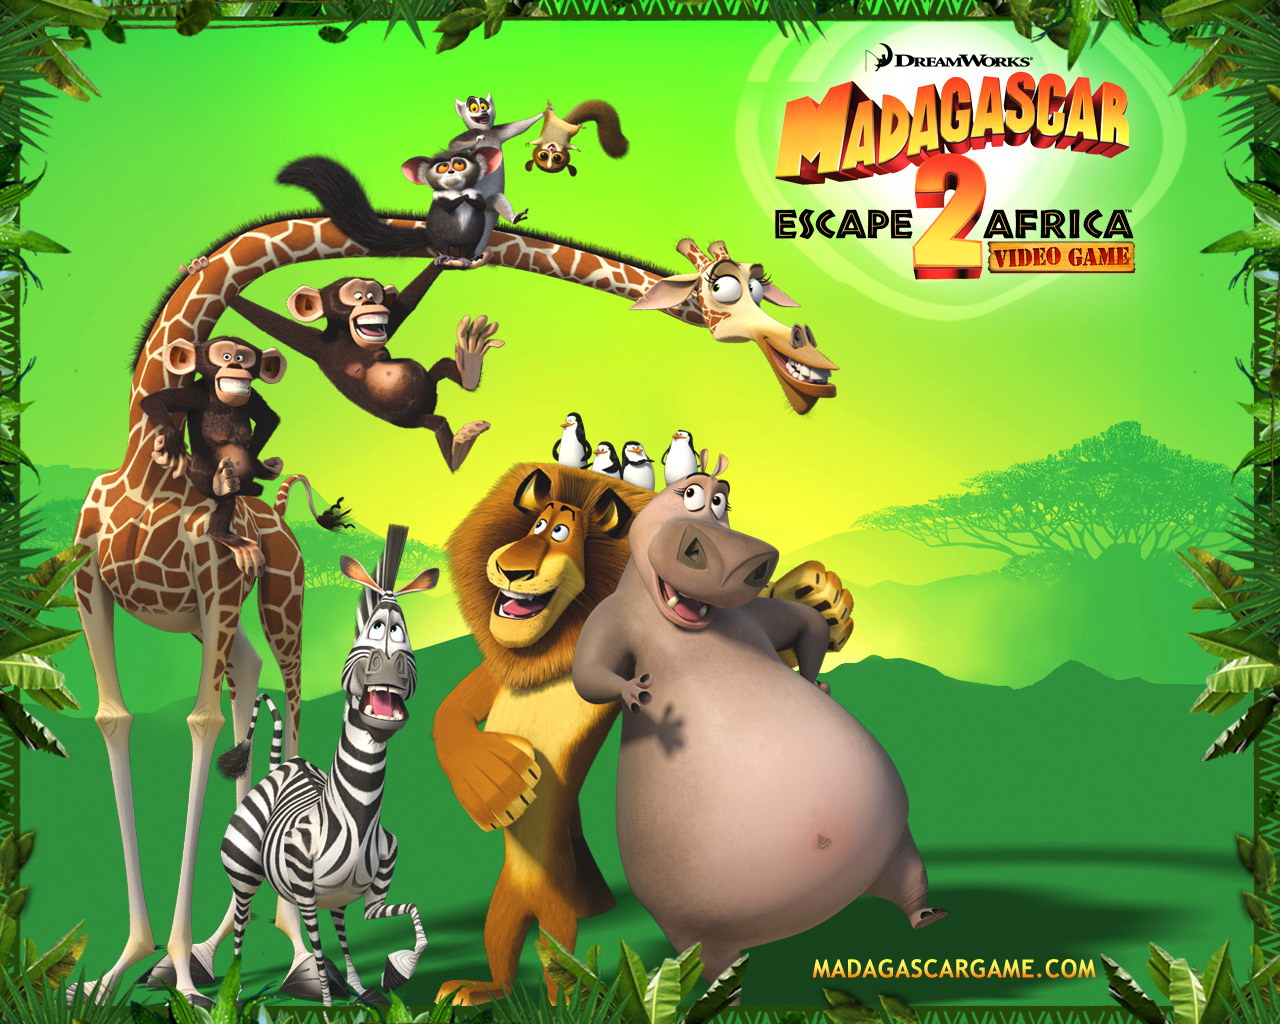 Madagascar Escape Africa Wallpaper Wallpaperholic